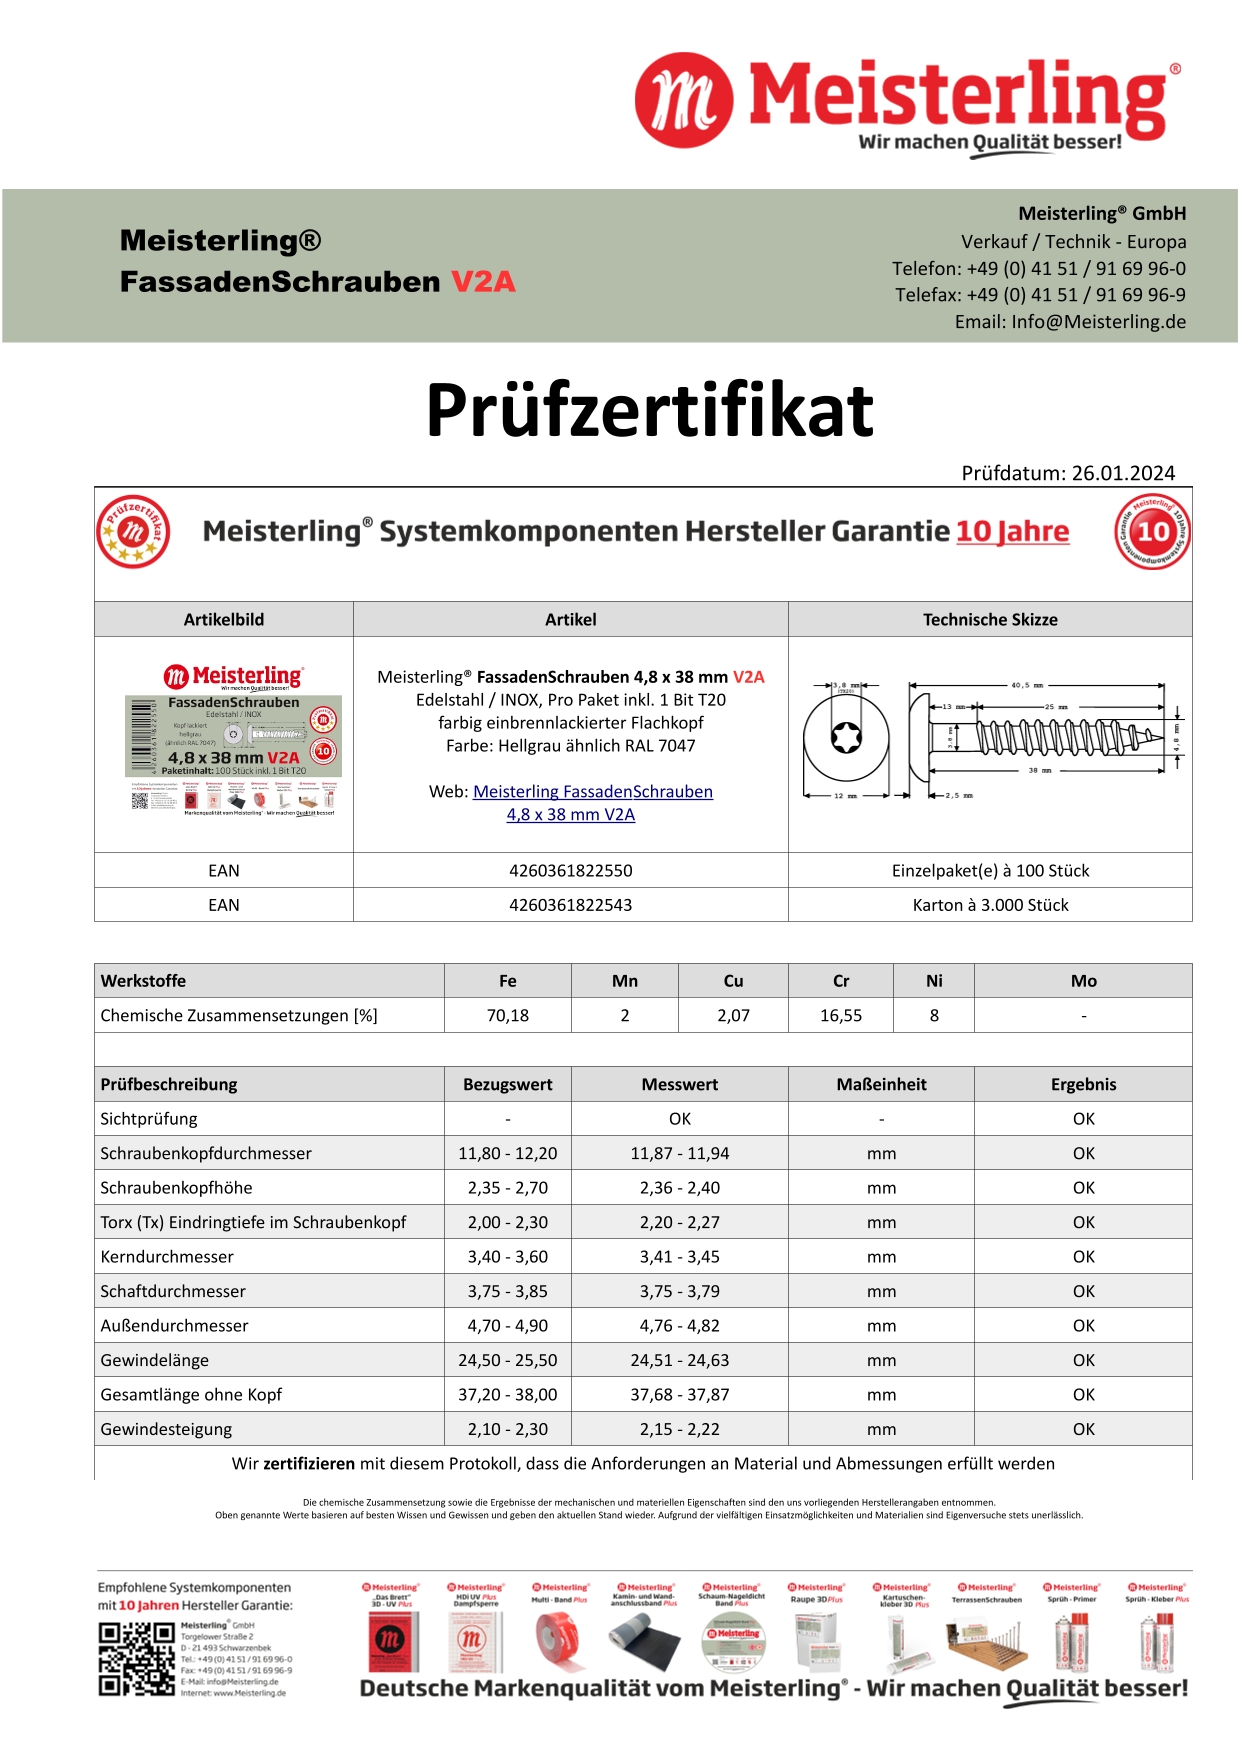 Prüfzertifikat Meisterling® FassadenSchrauben 4,8 x 38 mm V2a hellgrau